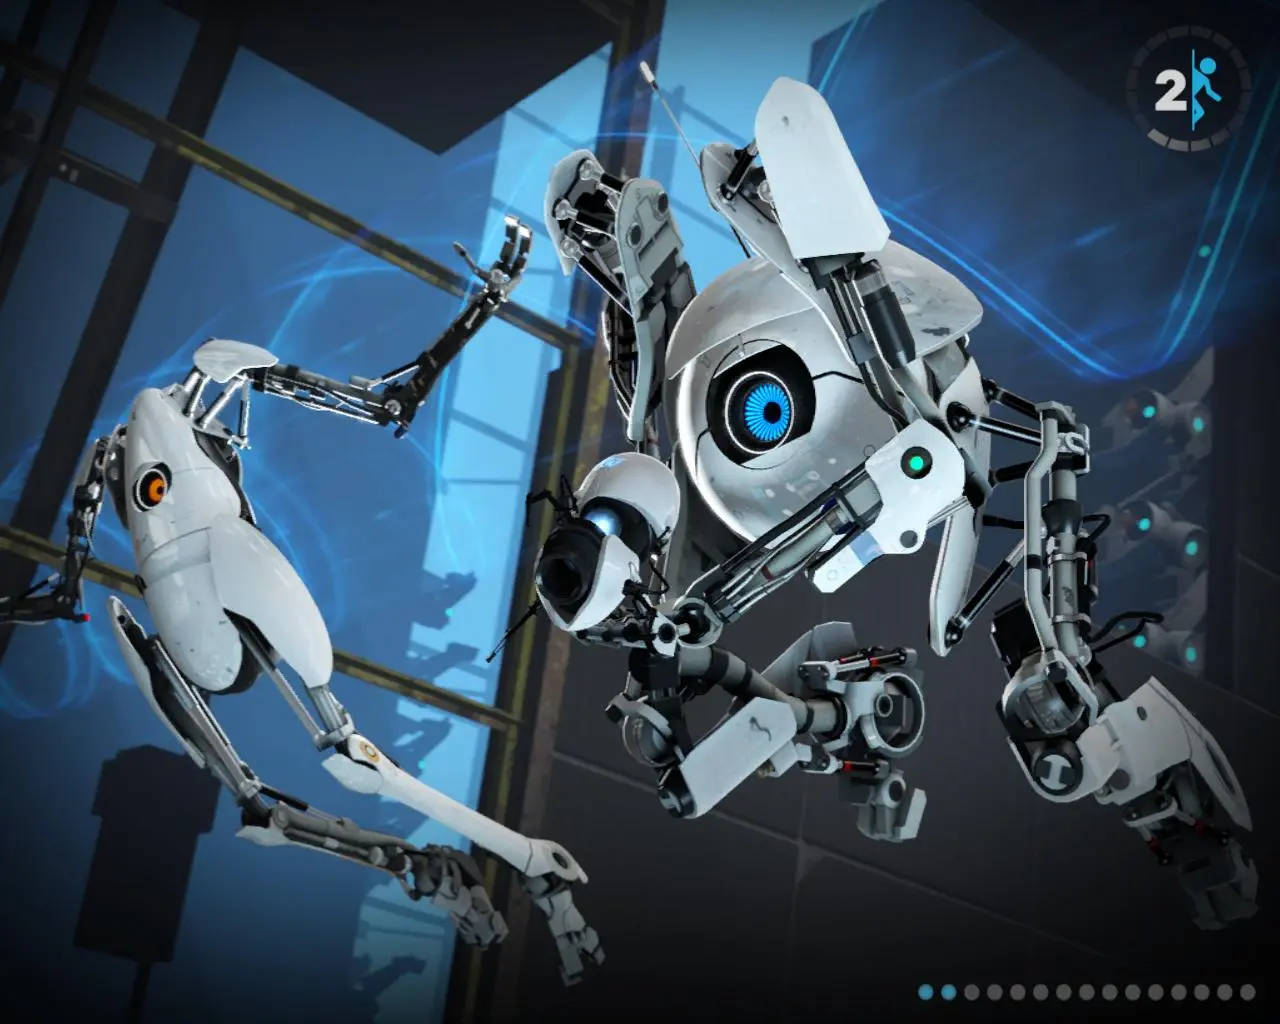 Innovative gameplay of Portal 2 on Dual Screen Wallpaper